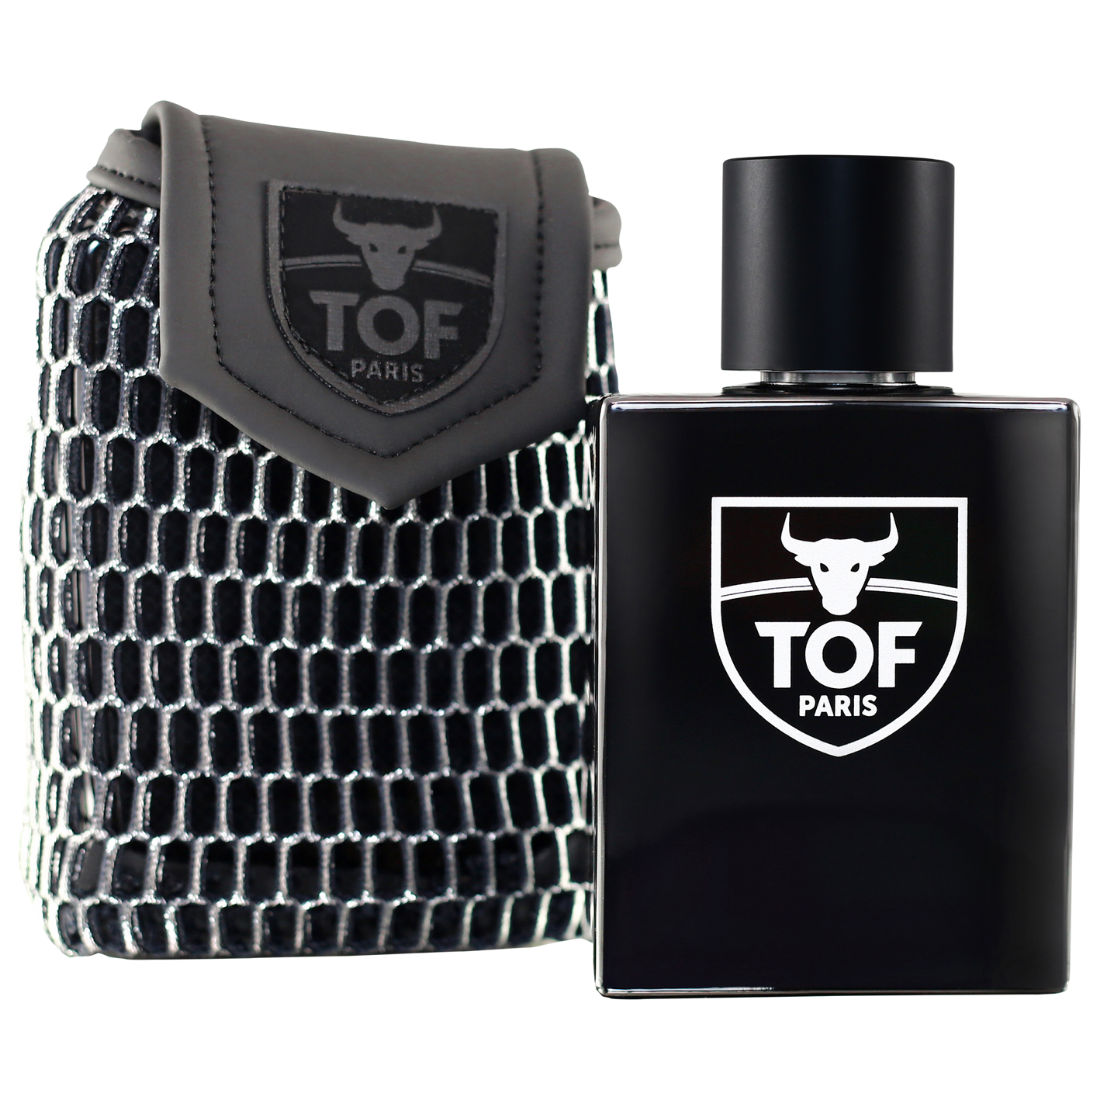 Tof Paris - Eau de Parfum Testosterone Limited Edition - 100 ML is te koop bij Flavourez